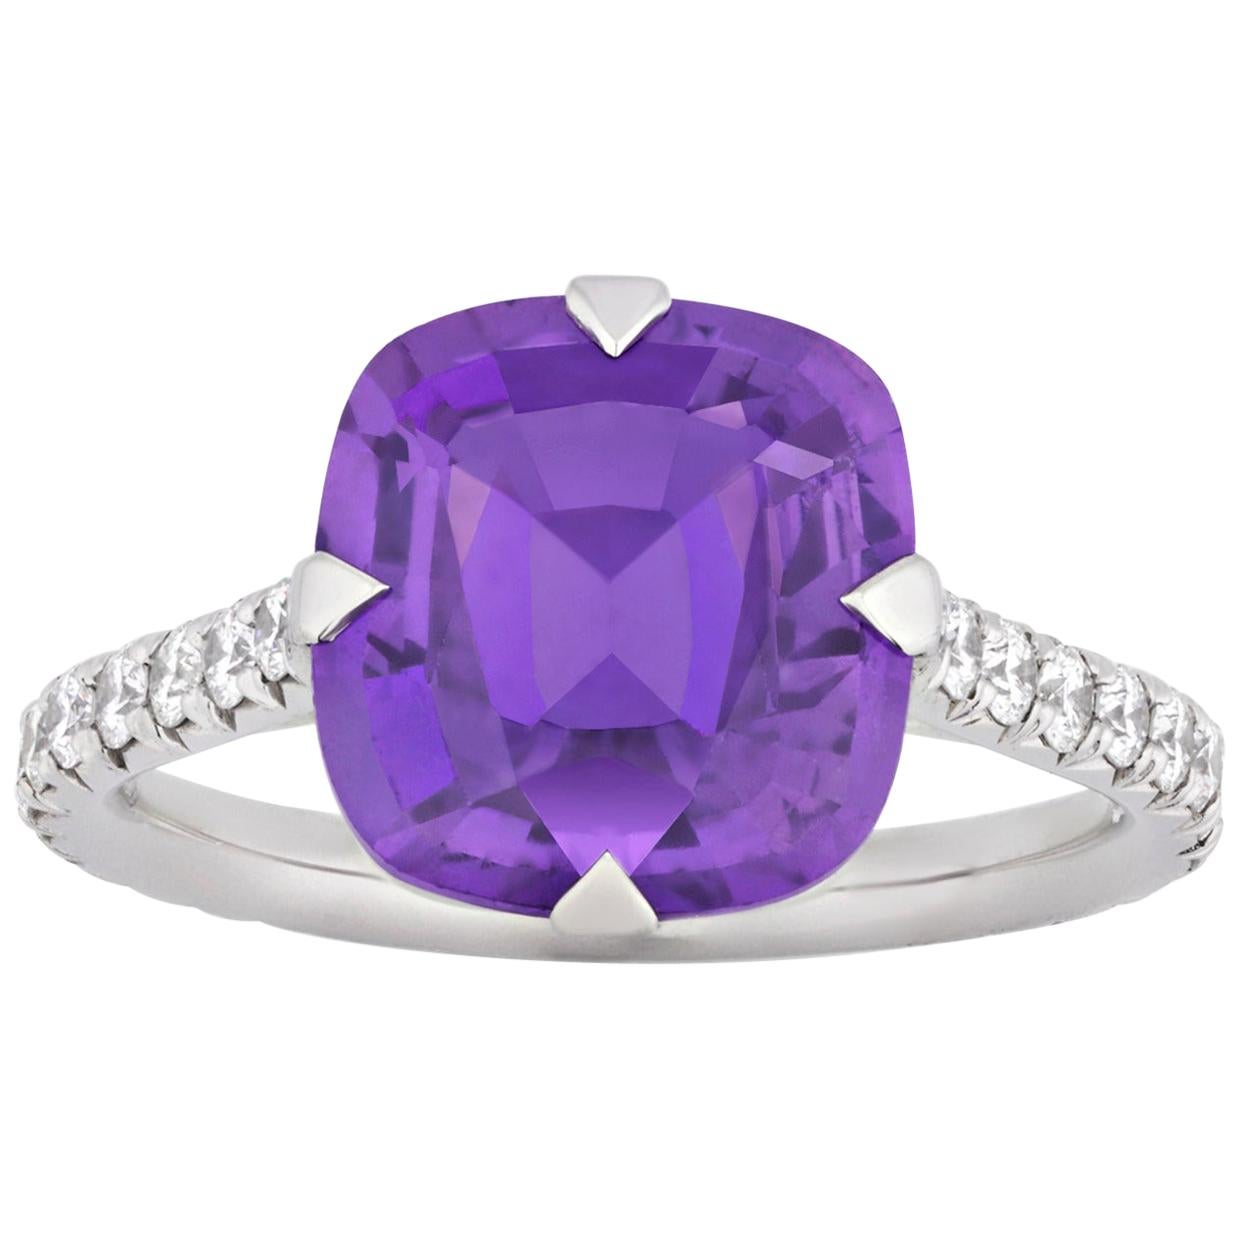 Untreated Purple Sapphire Ring, 4.07 Carat